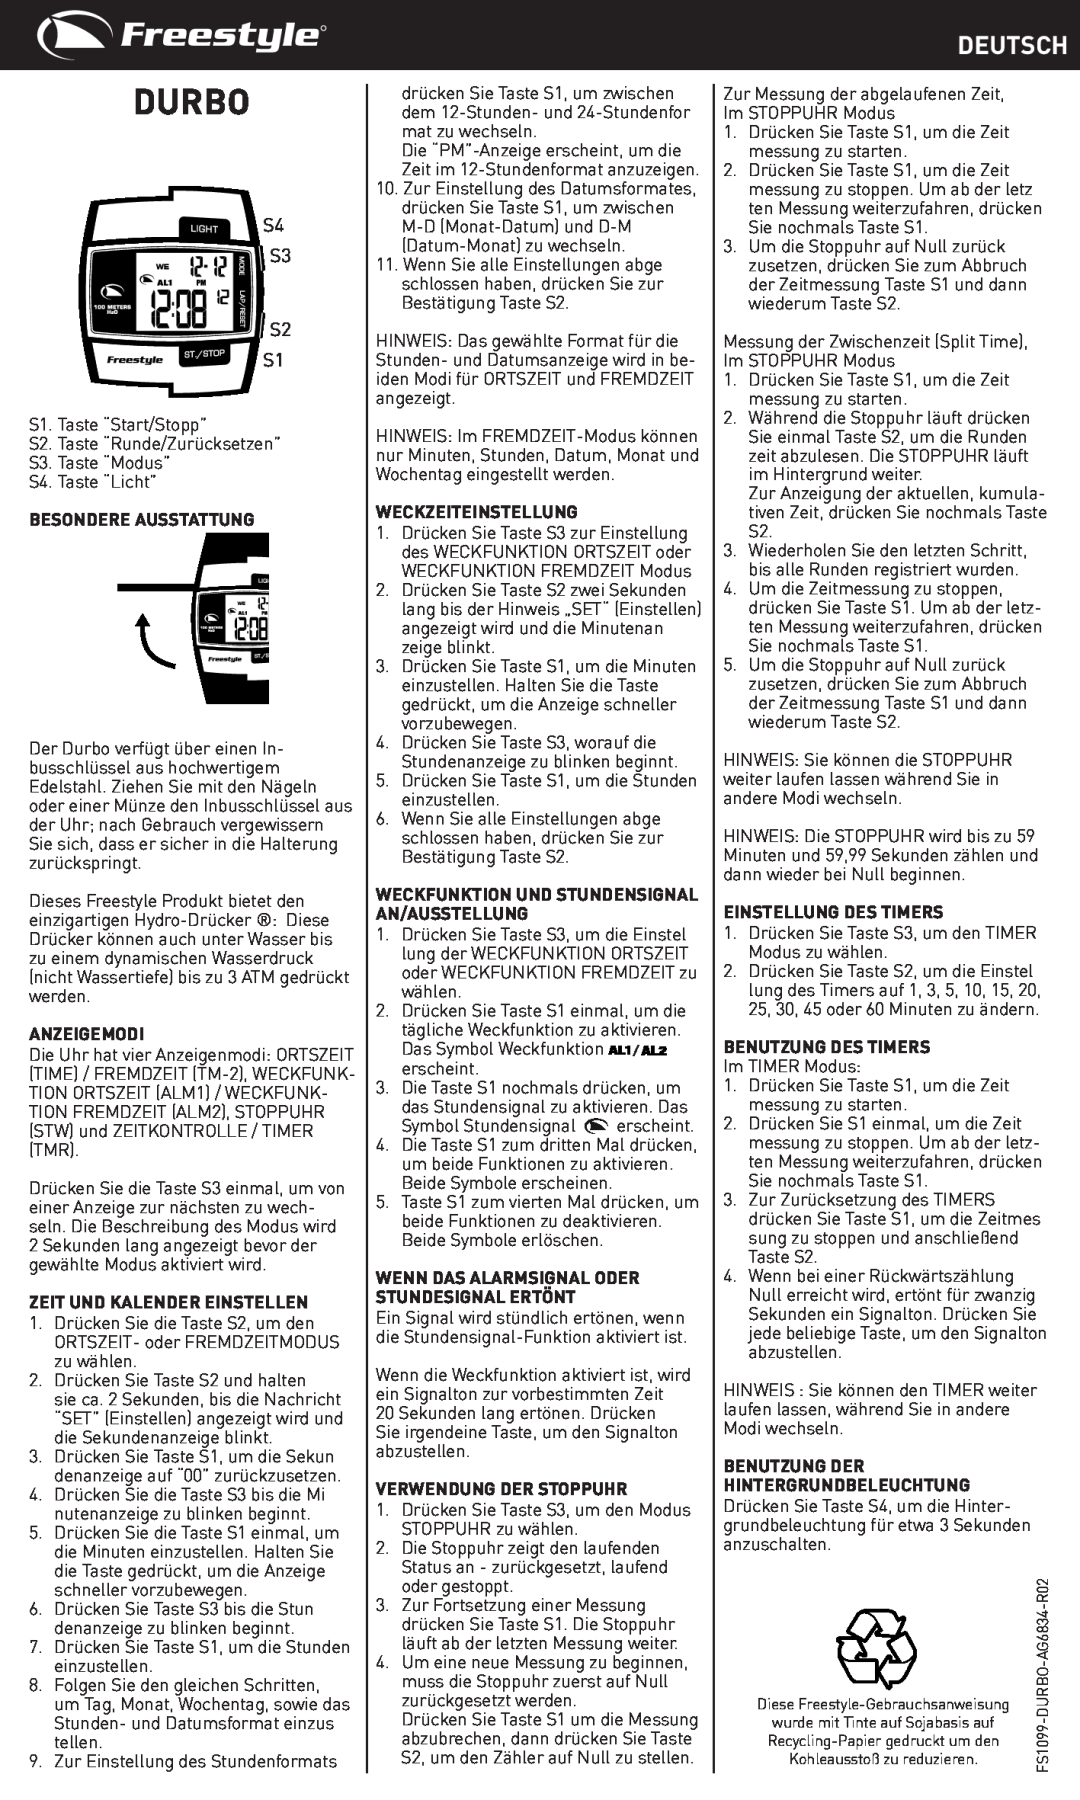 Freestyle Durbo manual Deutsch, S4 S3 S2 S1 